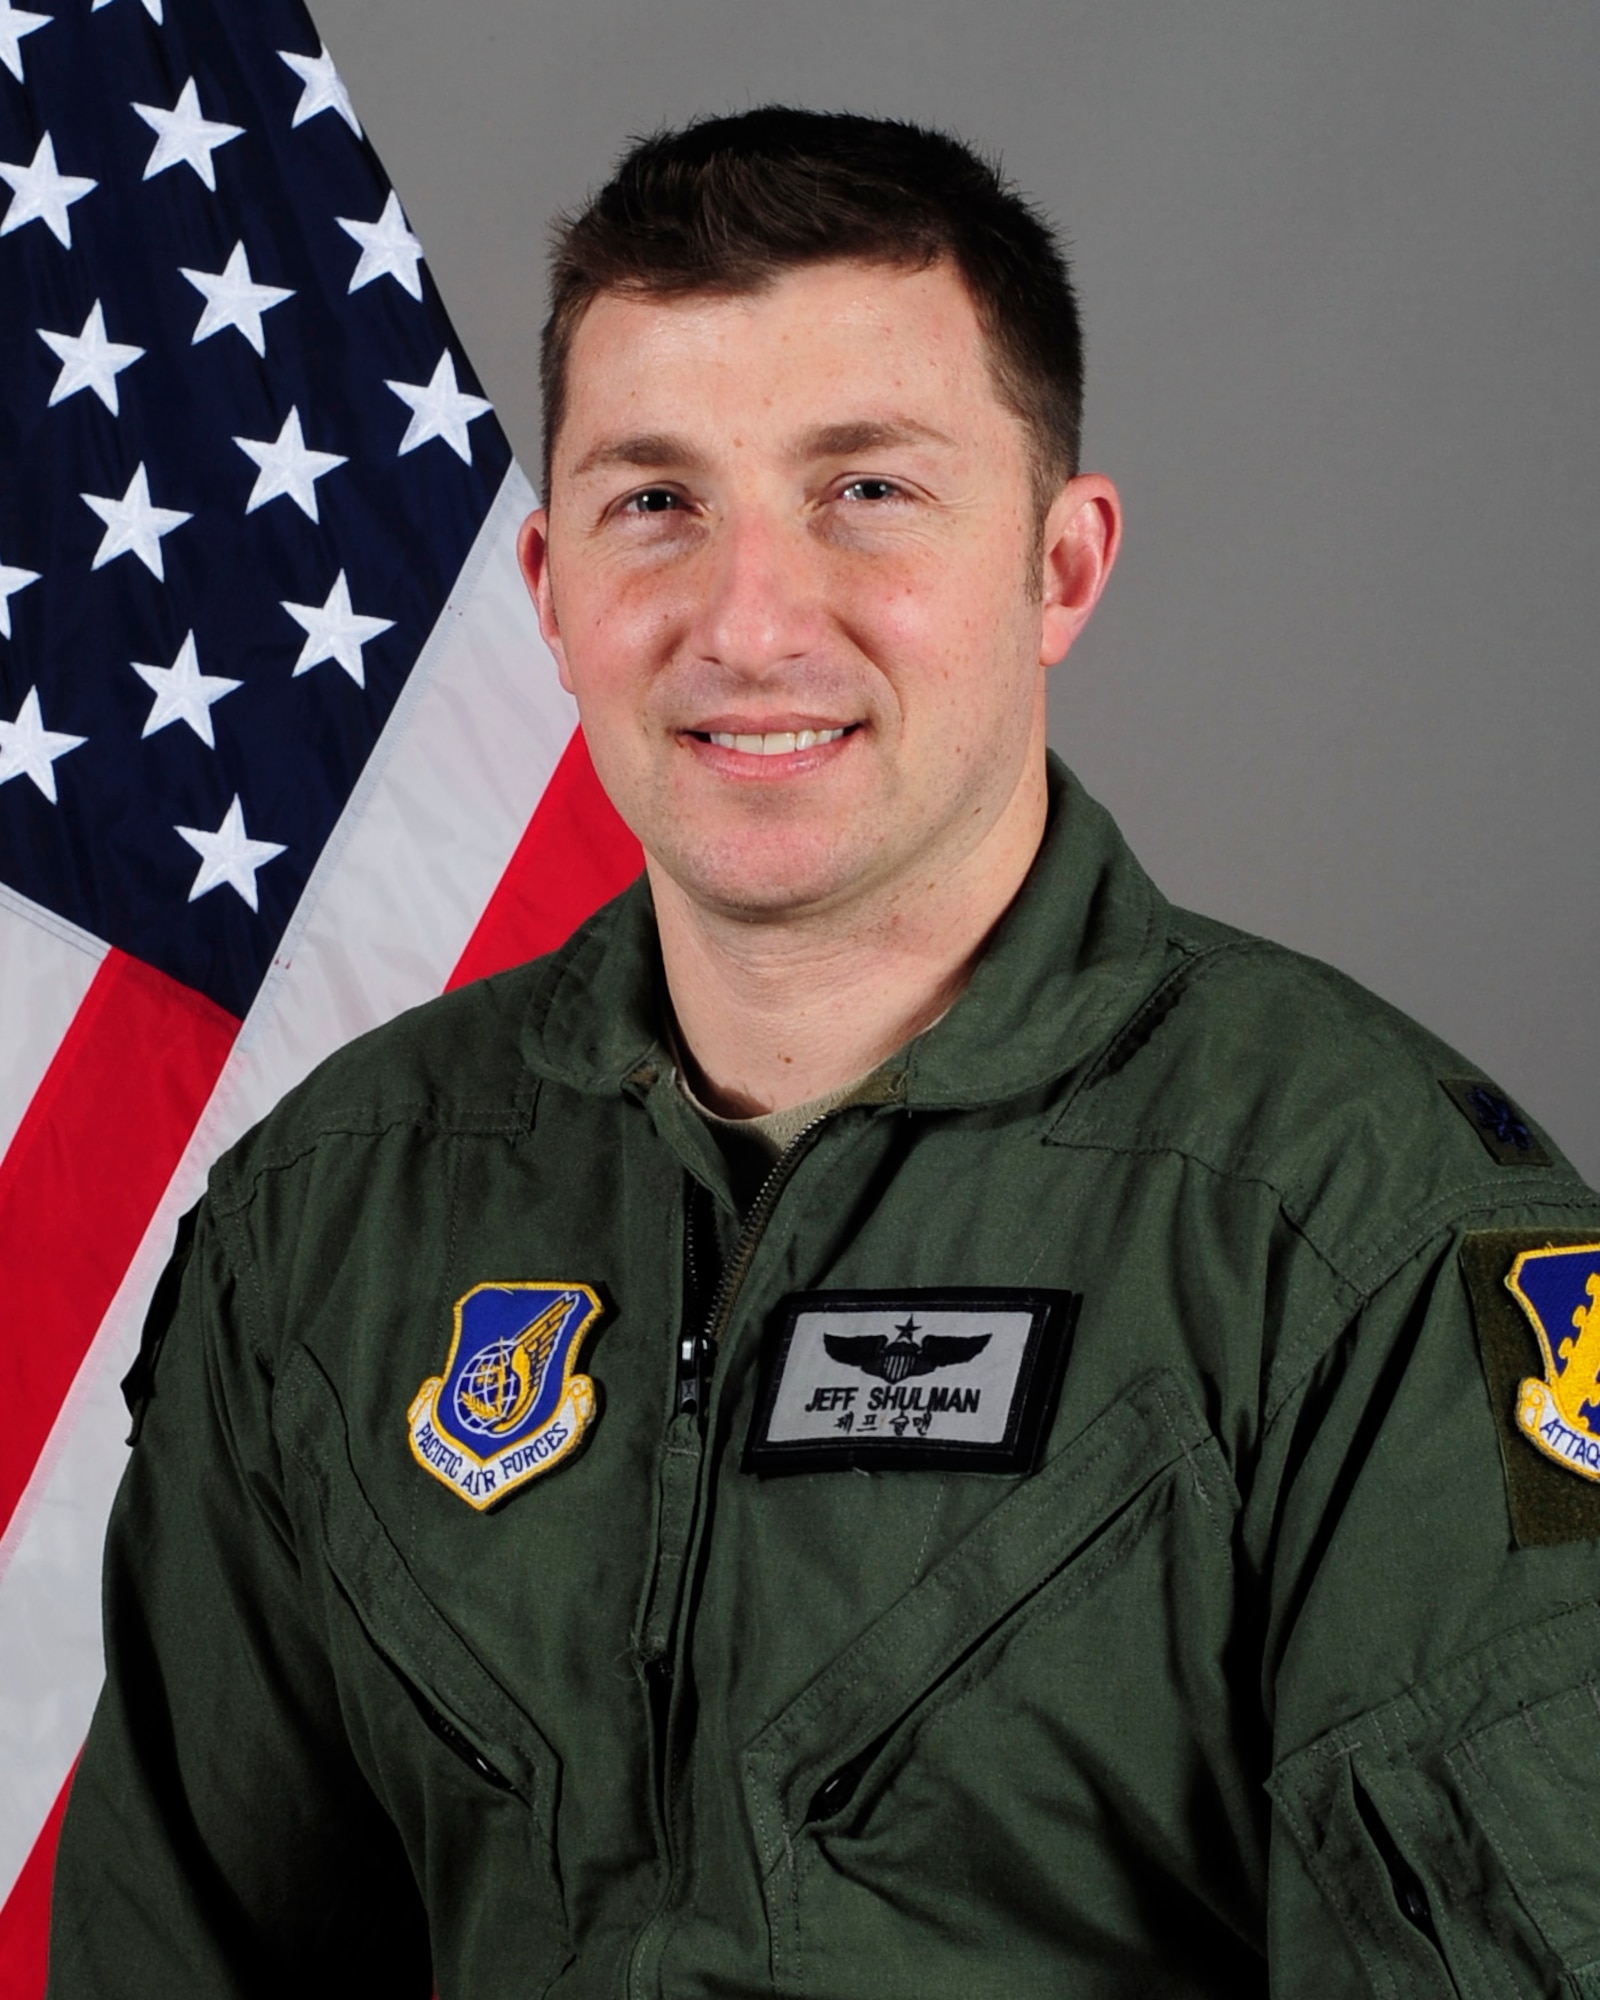 Lt. Col. Jeffrey Shulman